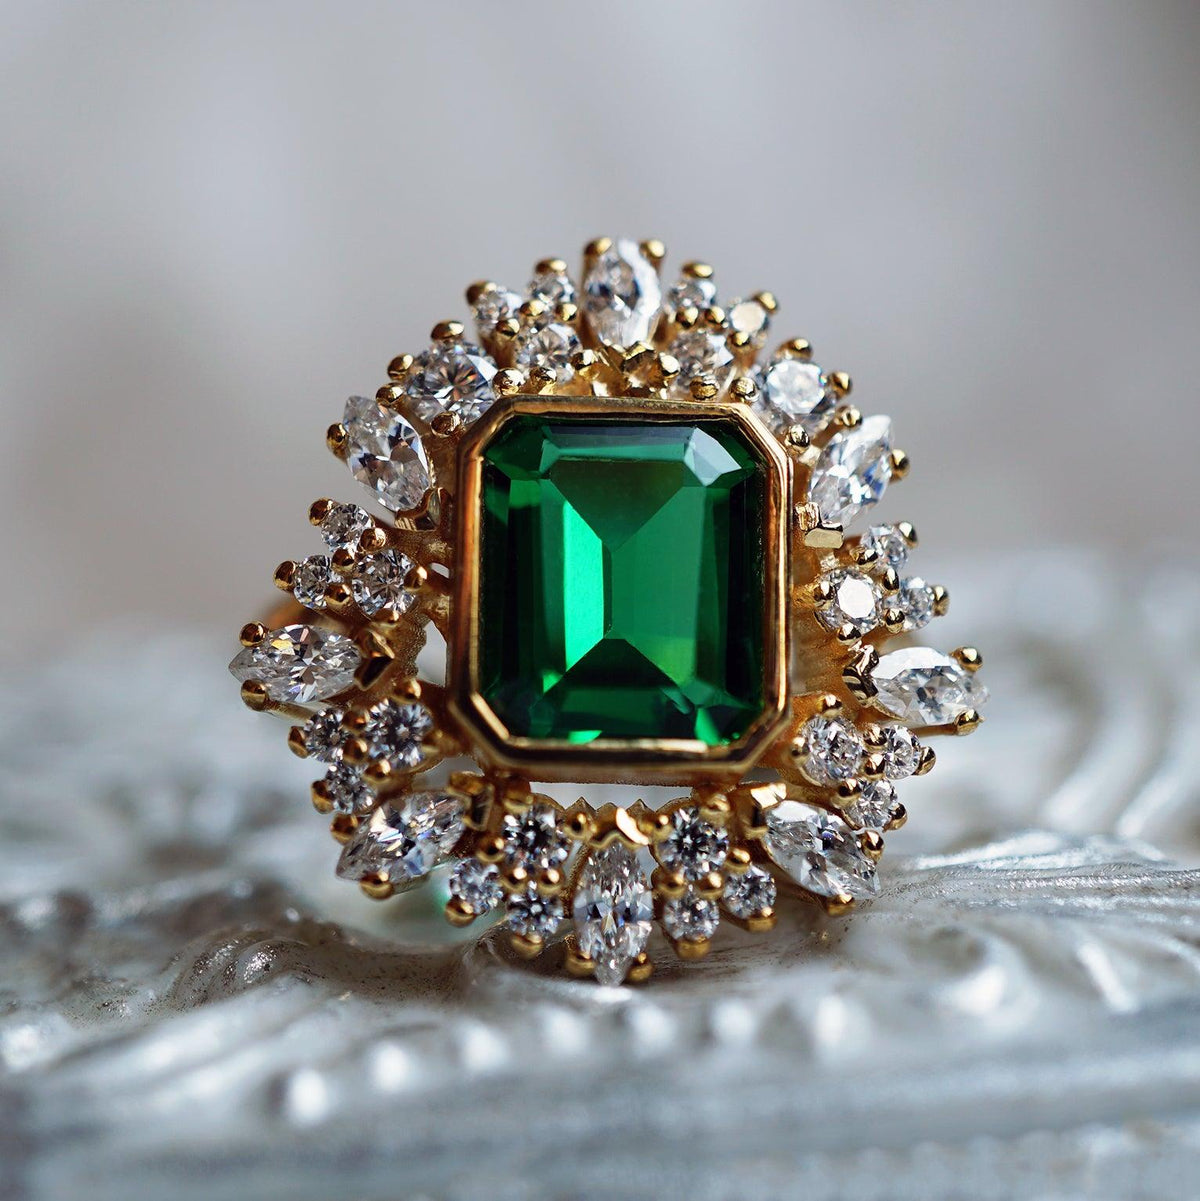 Forbidden Garden Emerald Diamond Ring in 14K and 18K Gold - Tippy Taste Jewelry